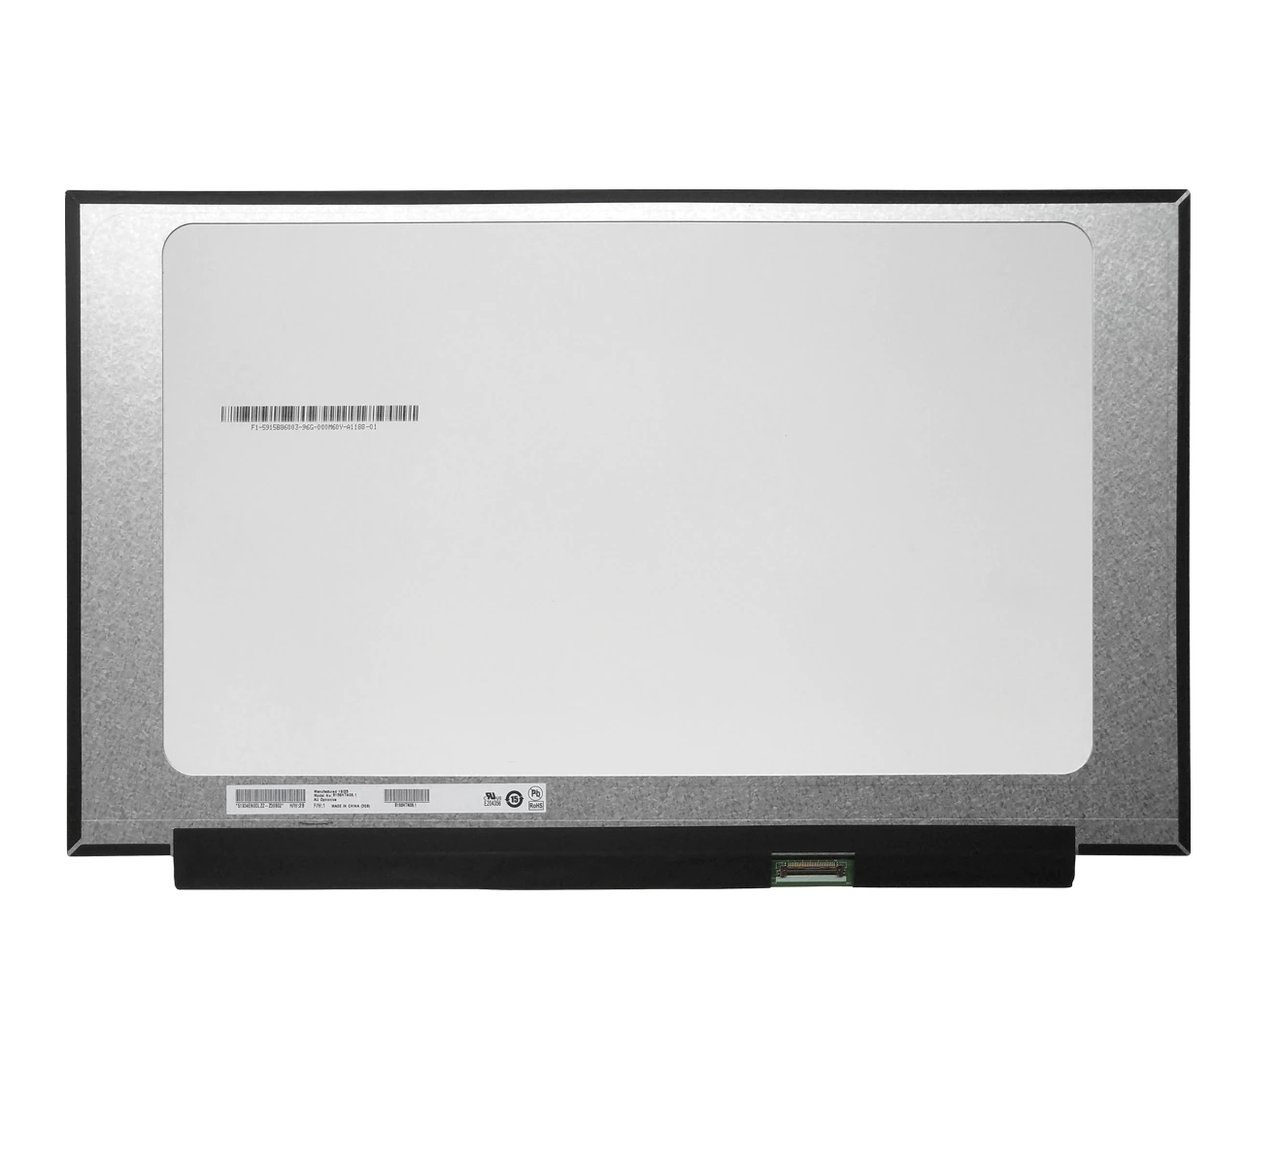 Матрица (экран) для ноутбука Sharp LQ156M1JW04, 15,6 40 eDp Slim, 1920x1080, IPS, 240Hz